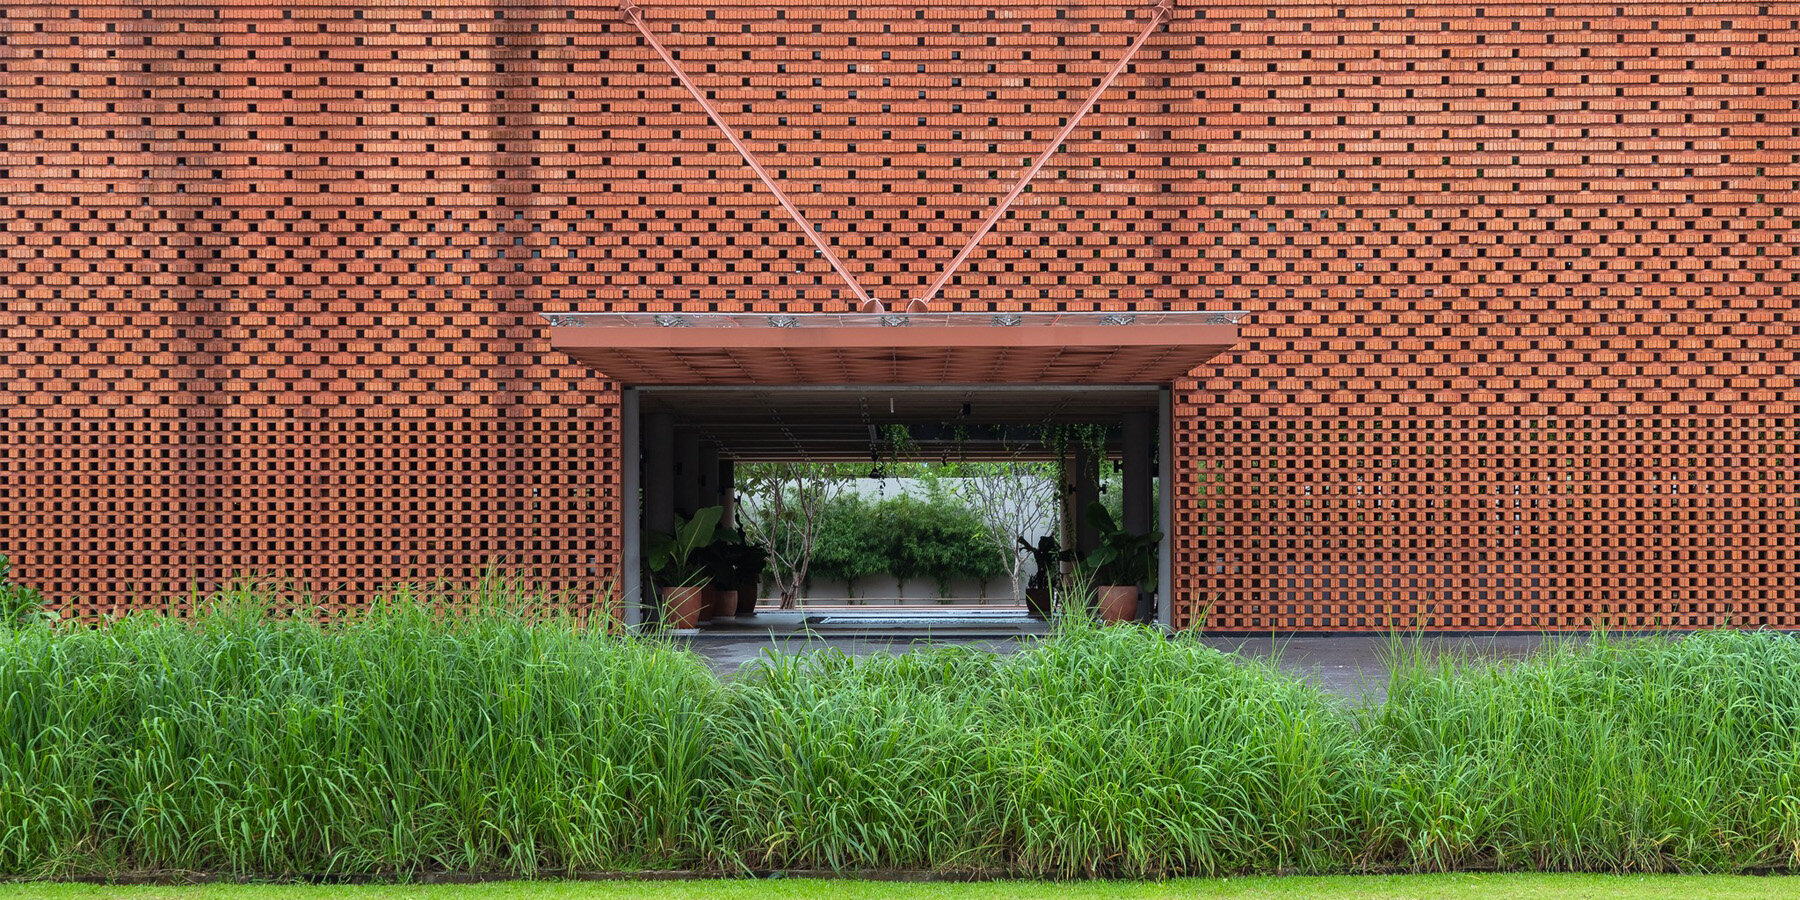 using bare bricks, MIA design studio shapes meditative club house along vietnamese coast